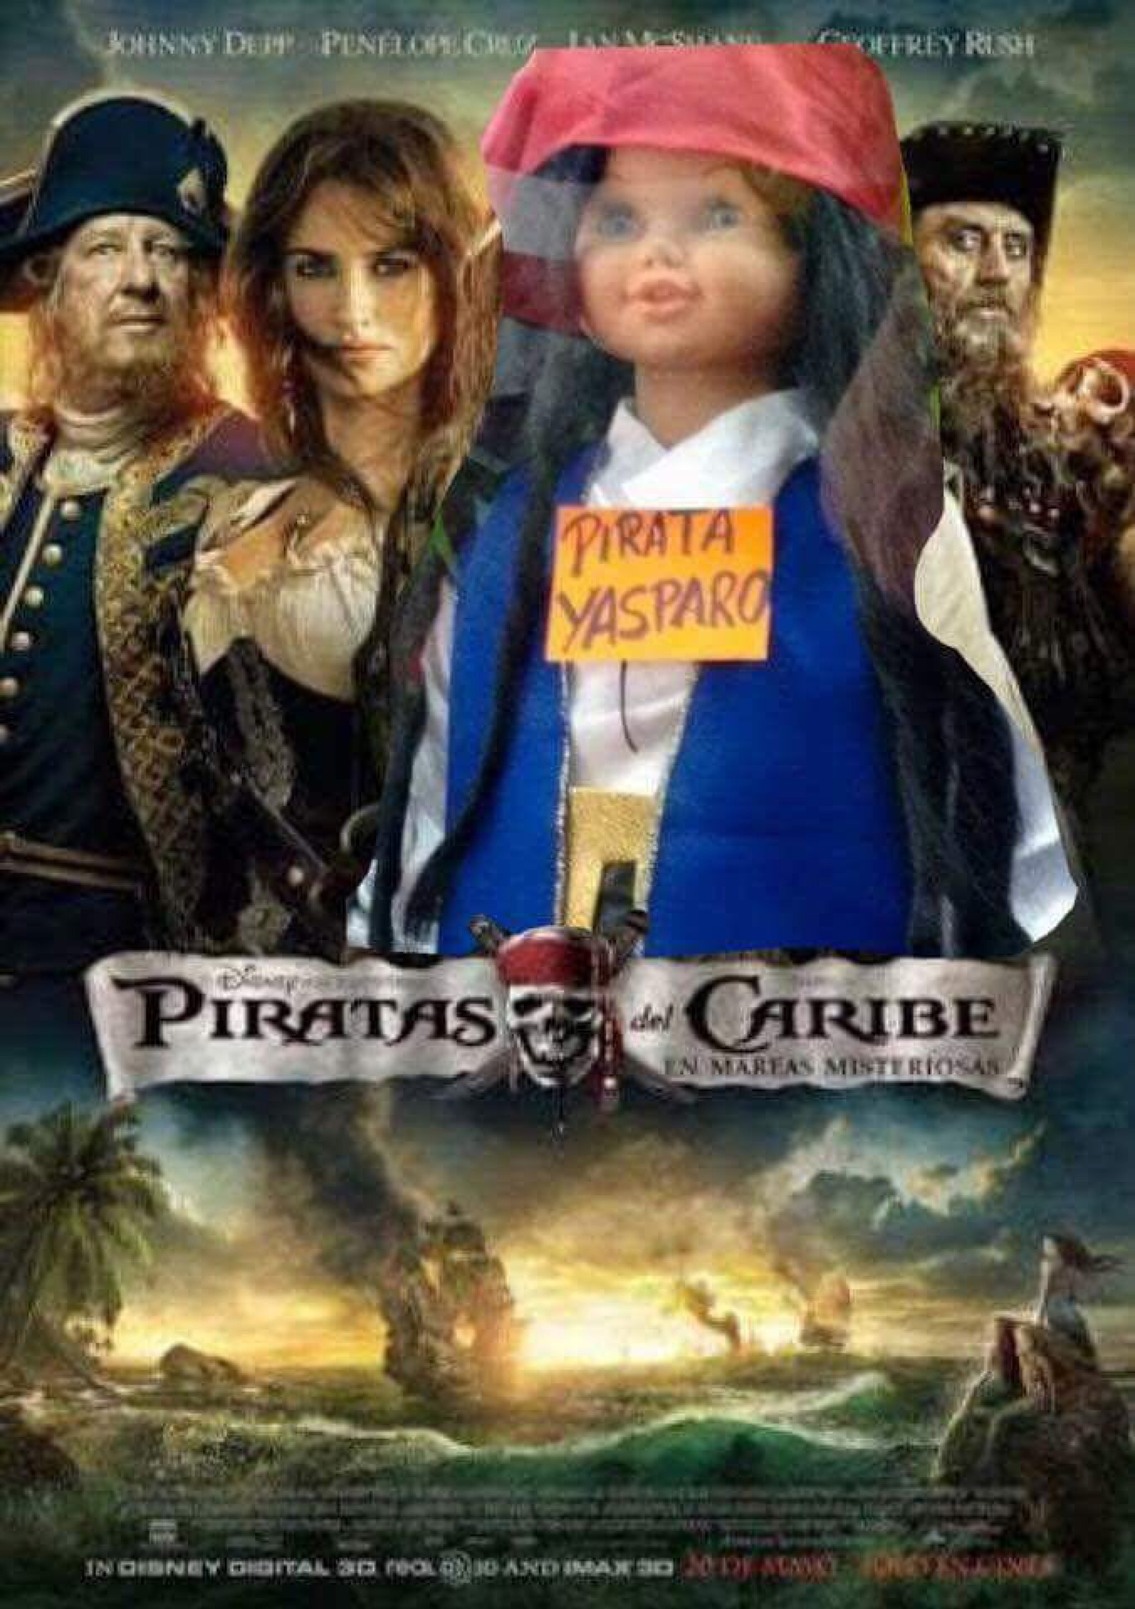 el mejor pirata - meme